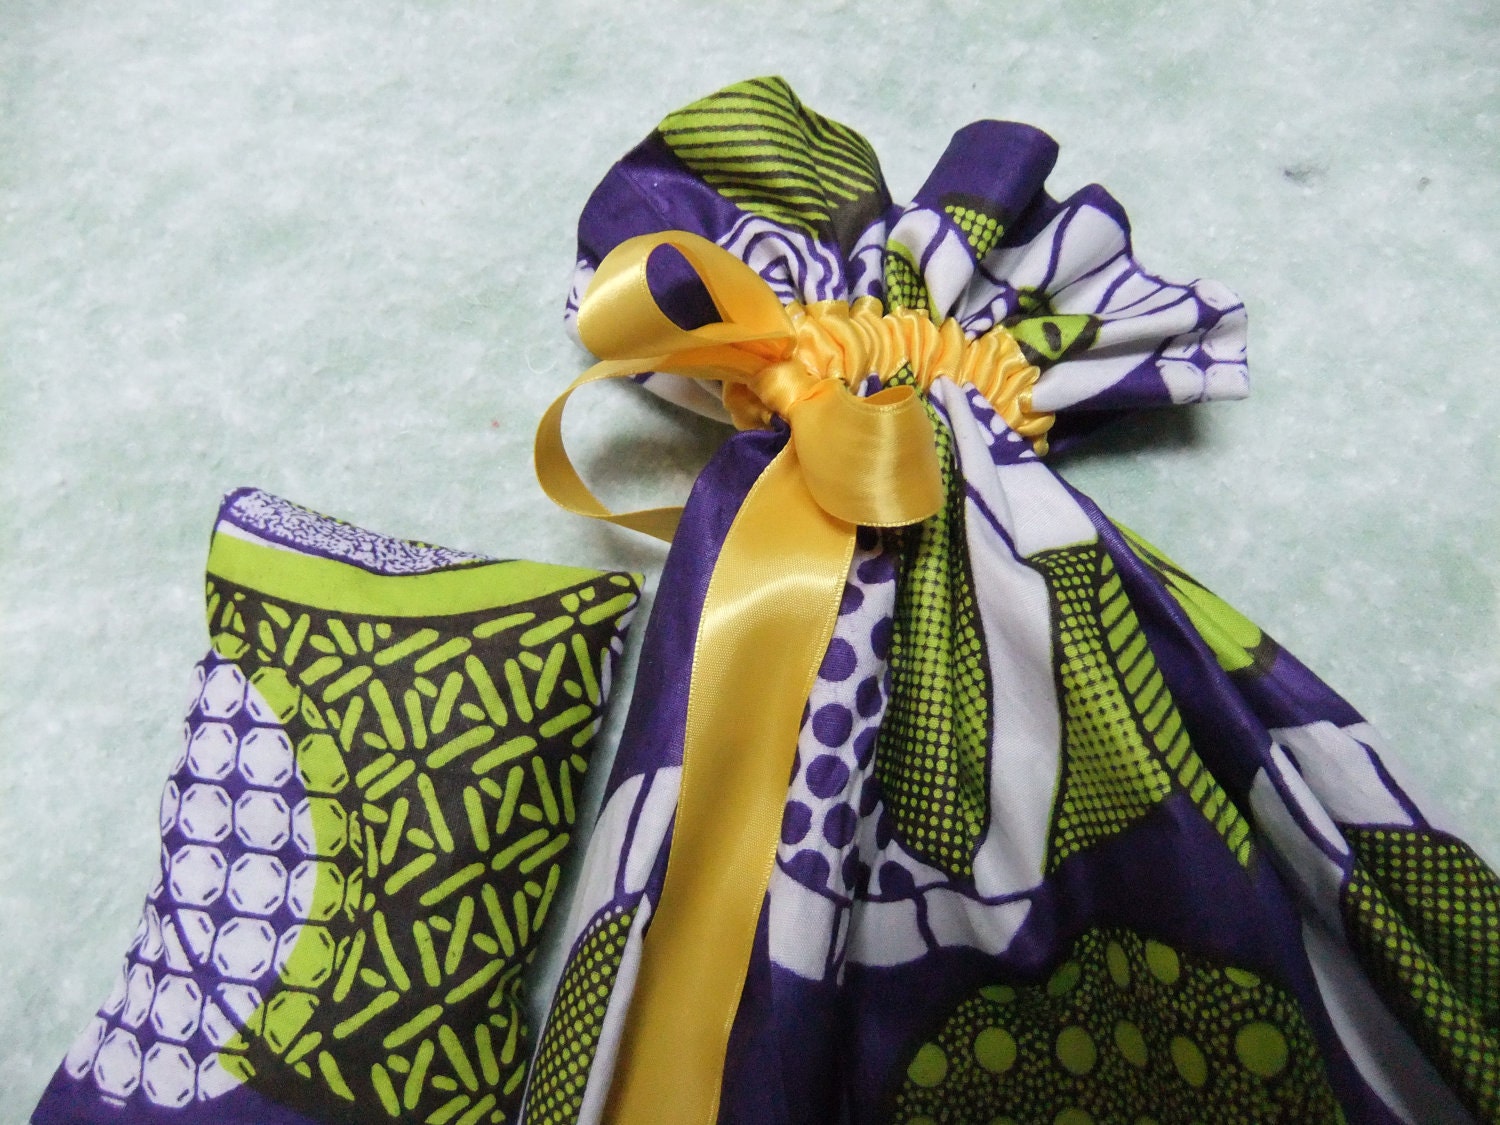 Travel Lingerie Laundry or Shoe Drawstring Bag With Lavender Sachet - Set  - Reusable Eco Friendly